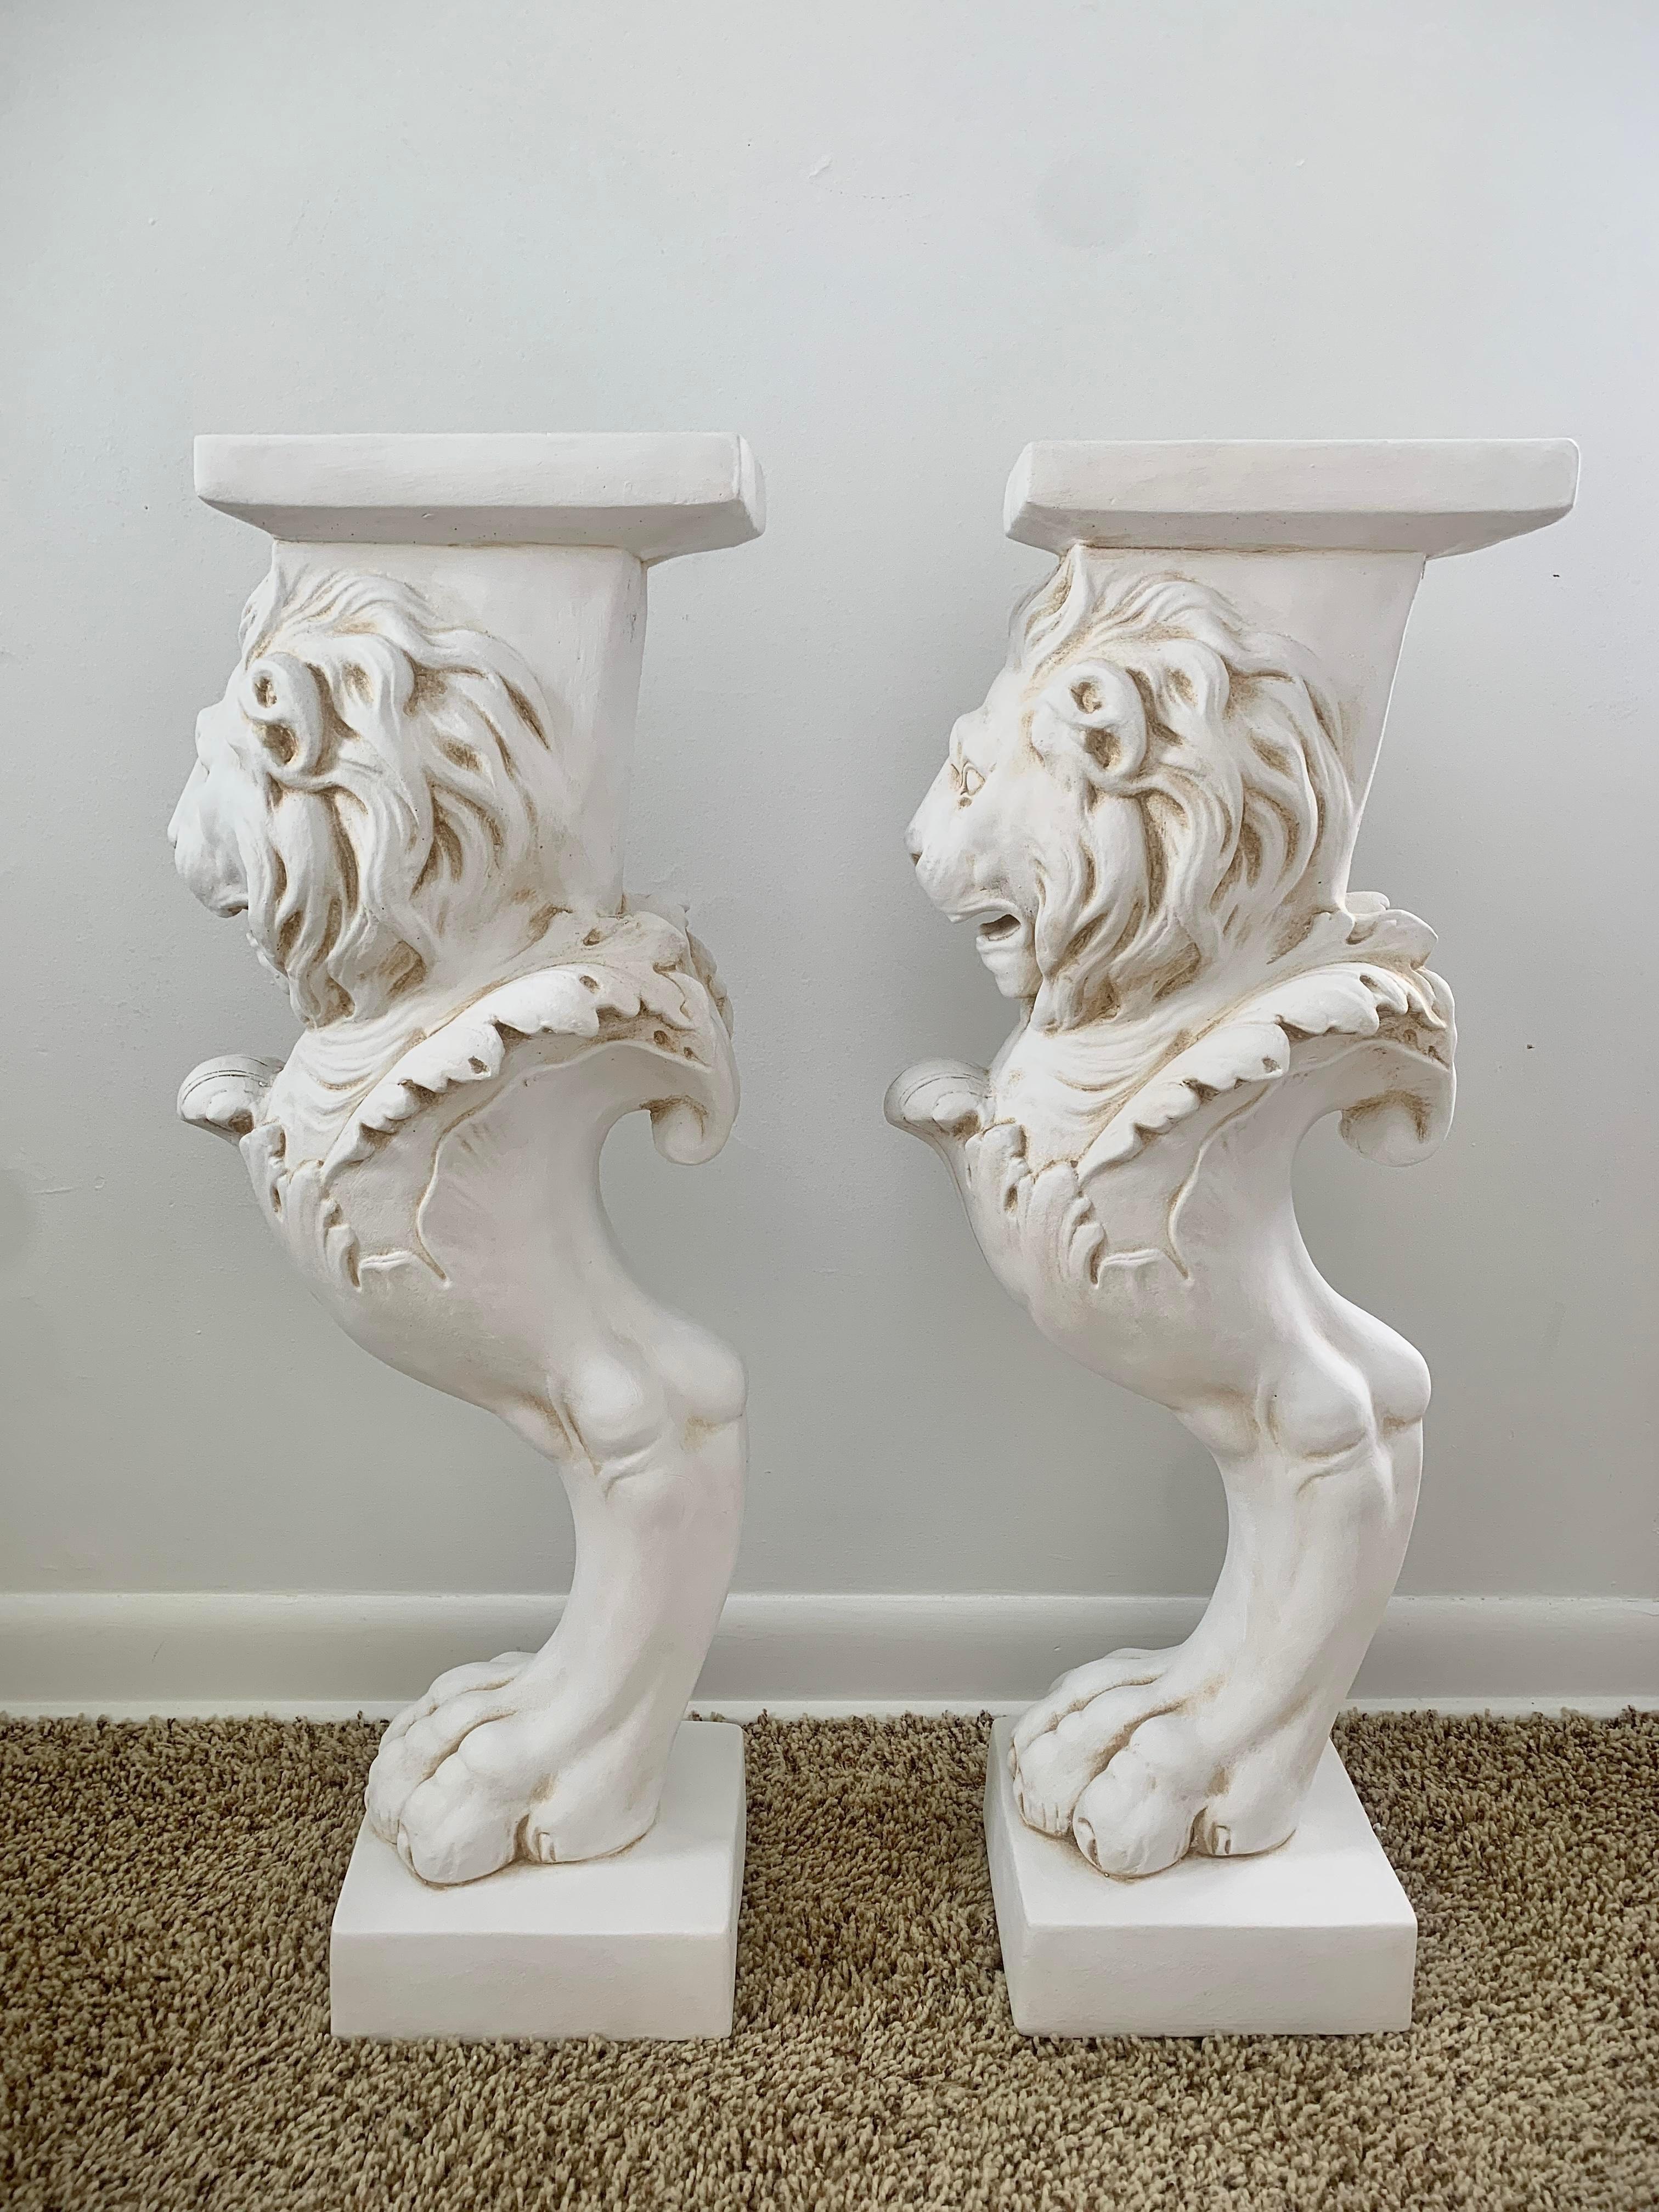 Contemporary Neoclassical Plaster Roman Lion Pedestals, a Pair For Sale